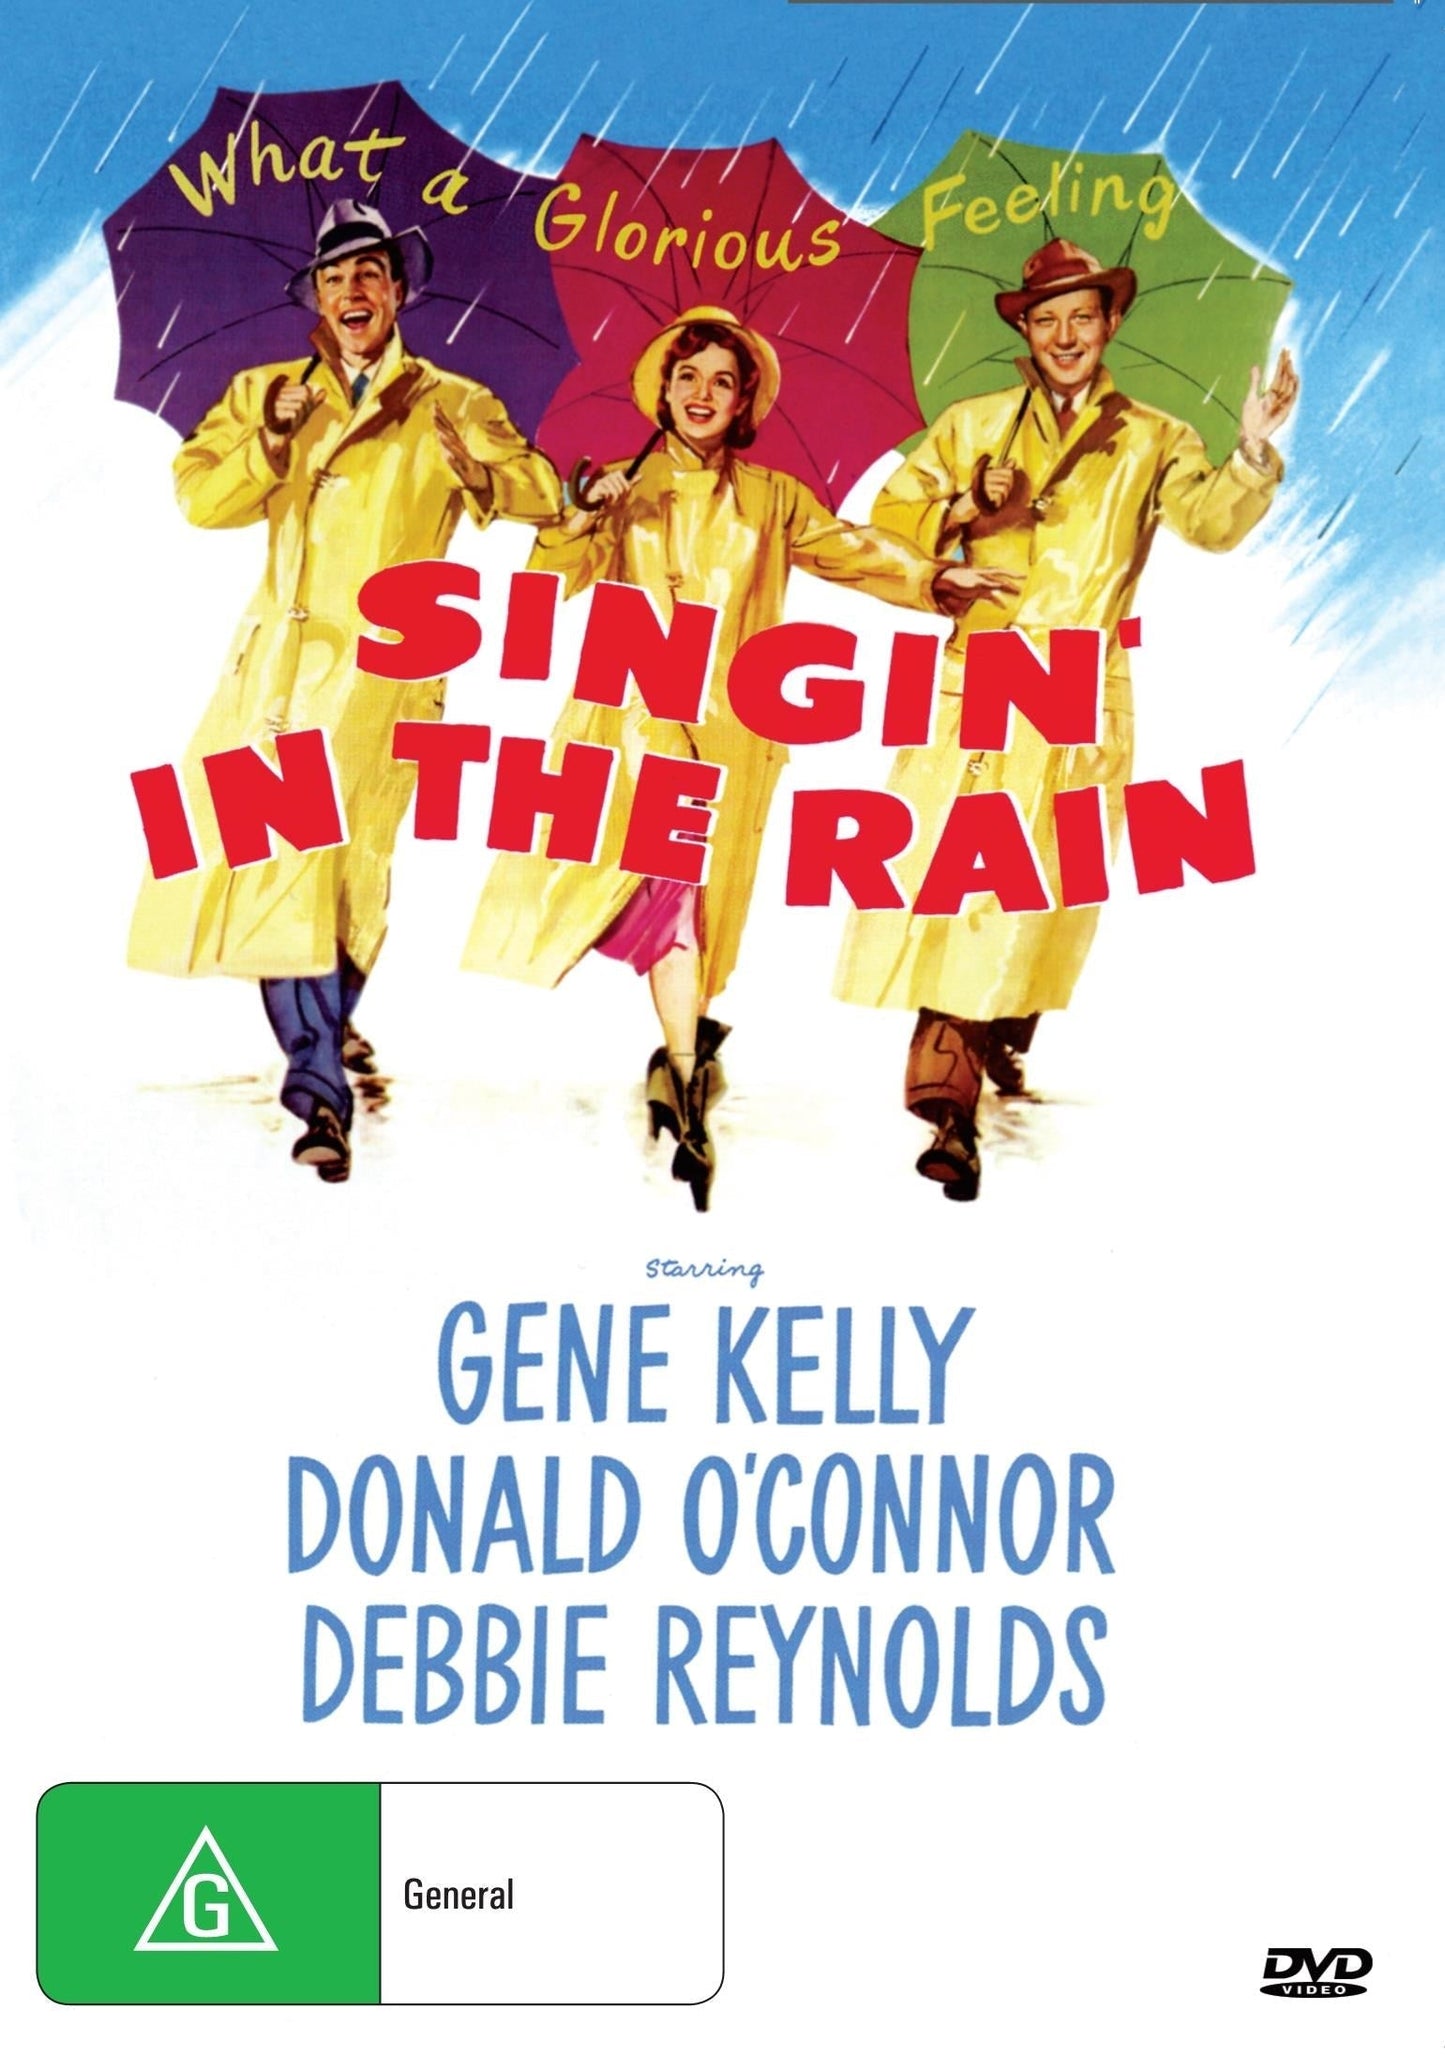 Singin' In The Rain rareandcollectibledvds